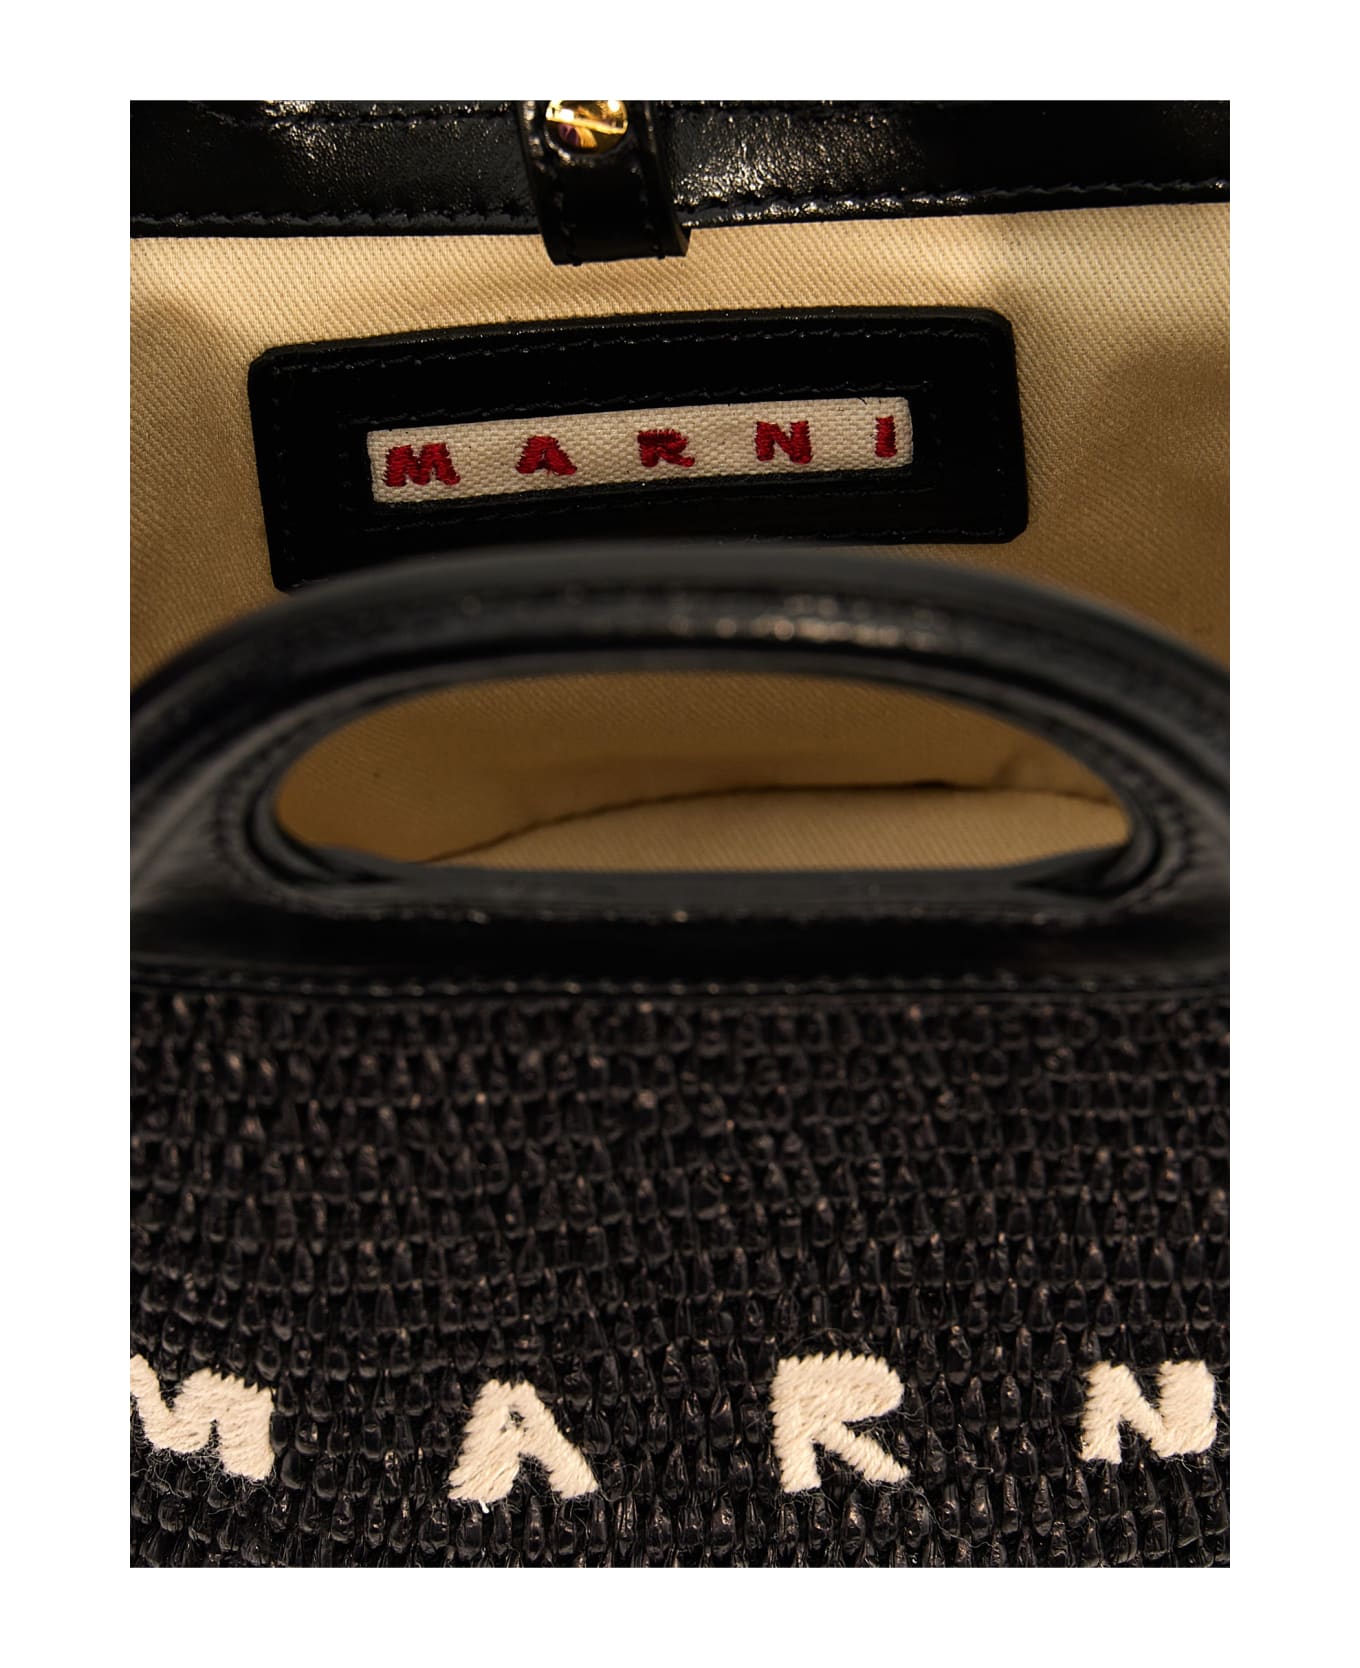 Marni 'tropicalia Micro' Handbag - Black   トートバッグ